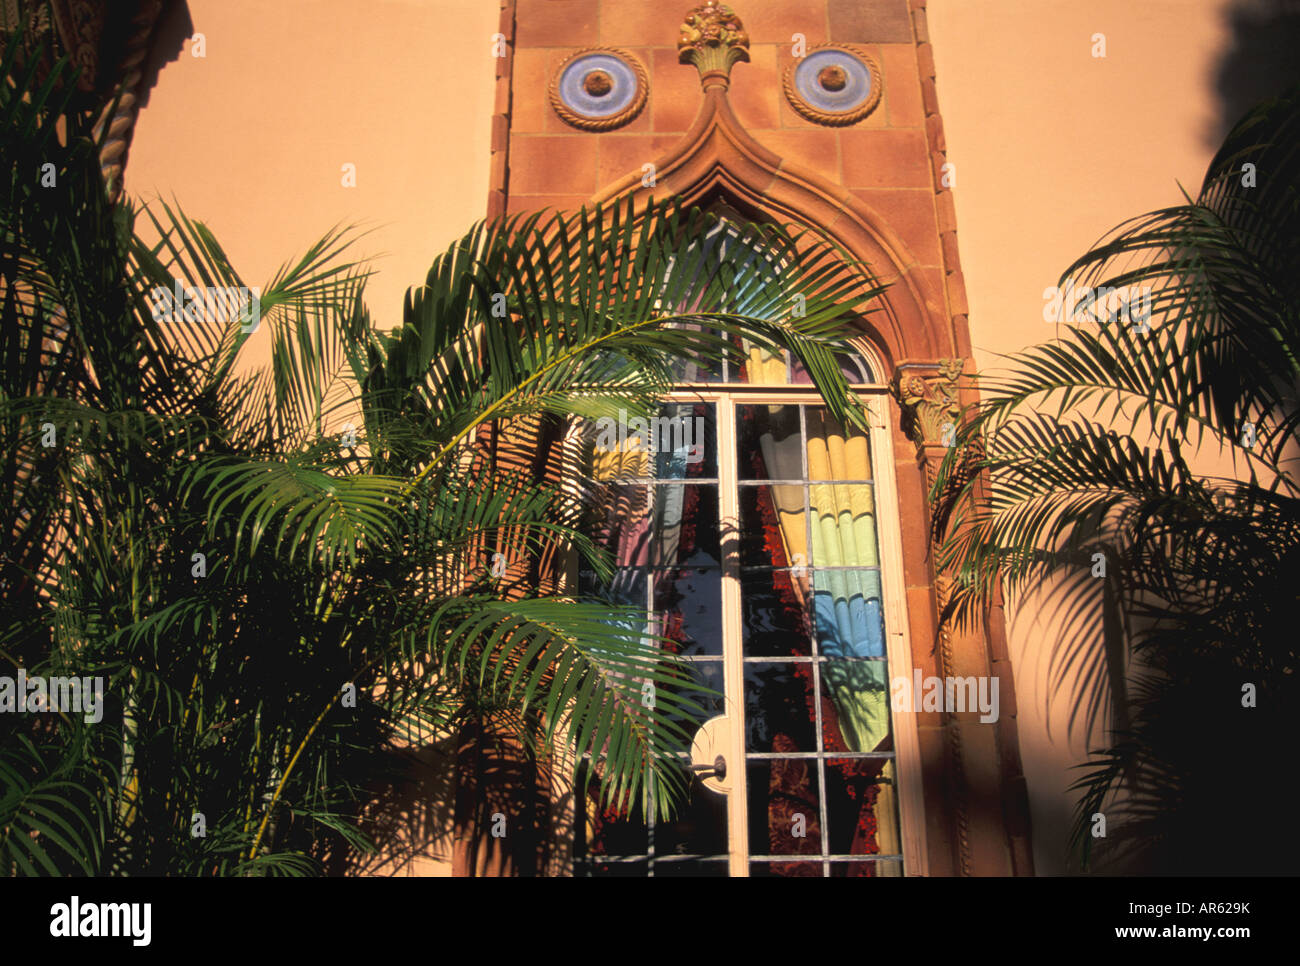 Sarasota Florida John Ringling Hause Außenfenster ca Dzan ca d'zan Touristenattraktion Stockfoto